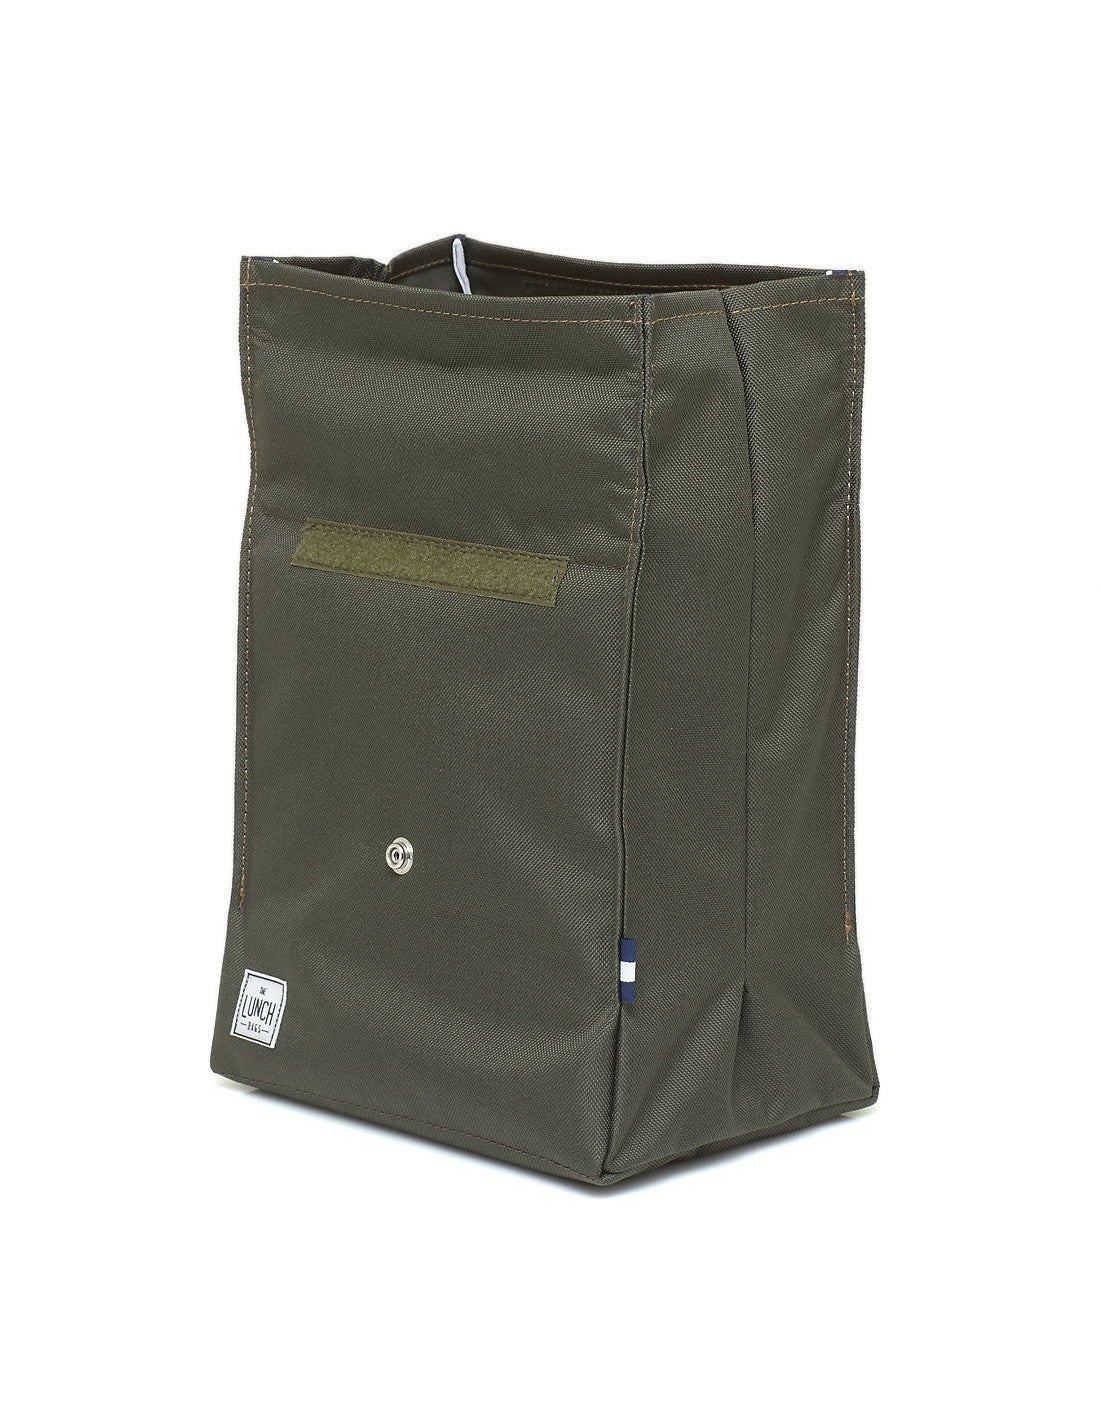 The Lunch Bags Original Olive Ισοθερμική Τσάντα 5lt